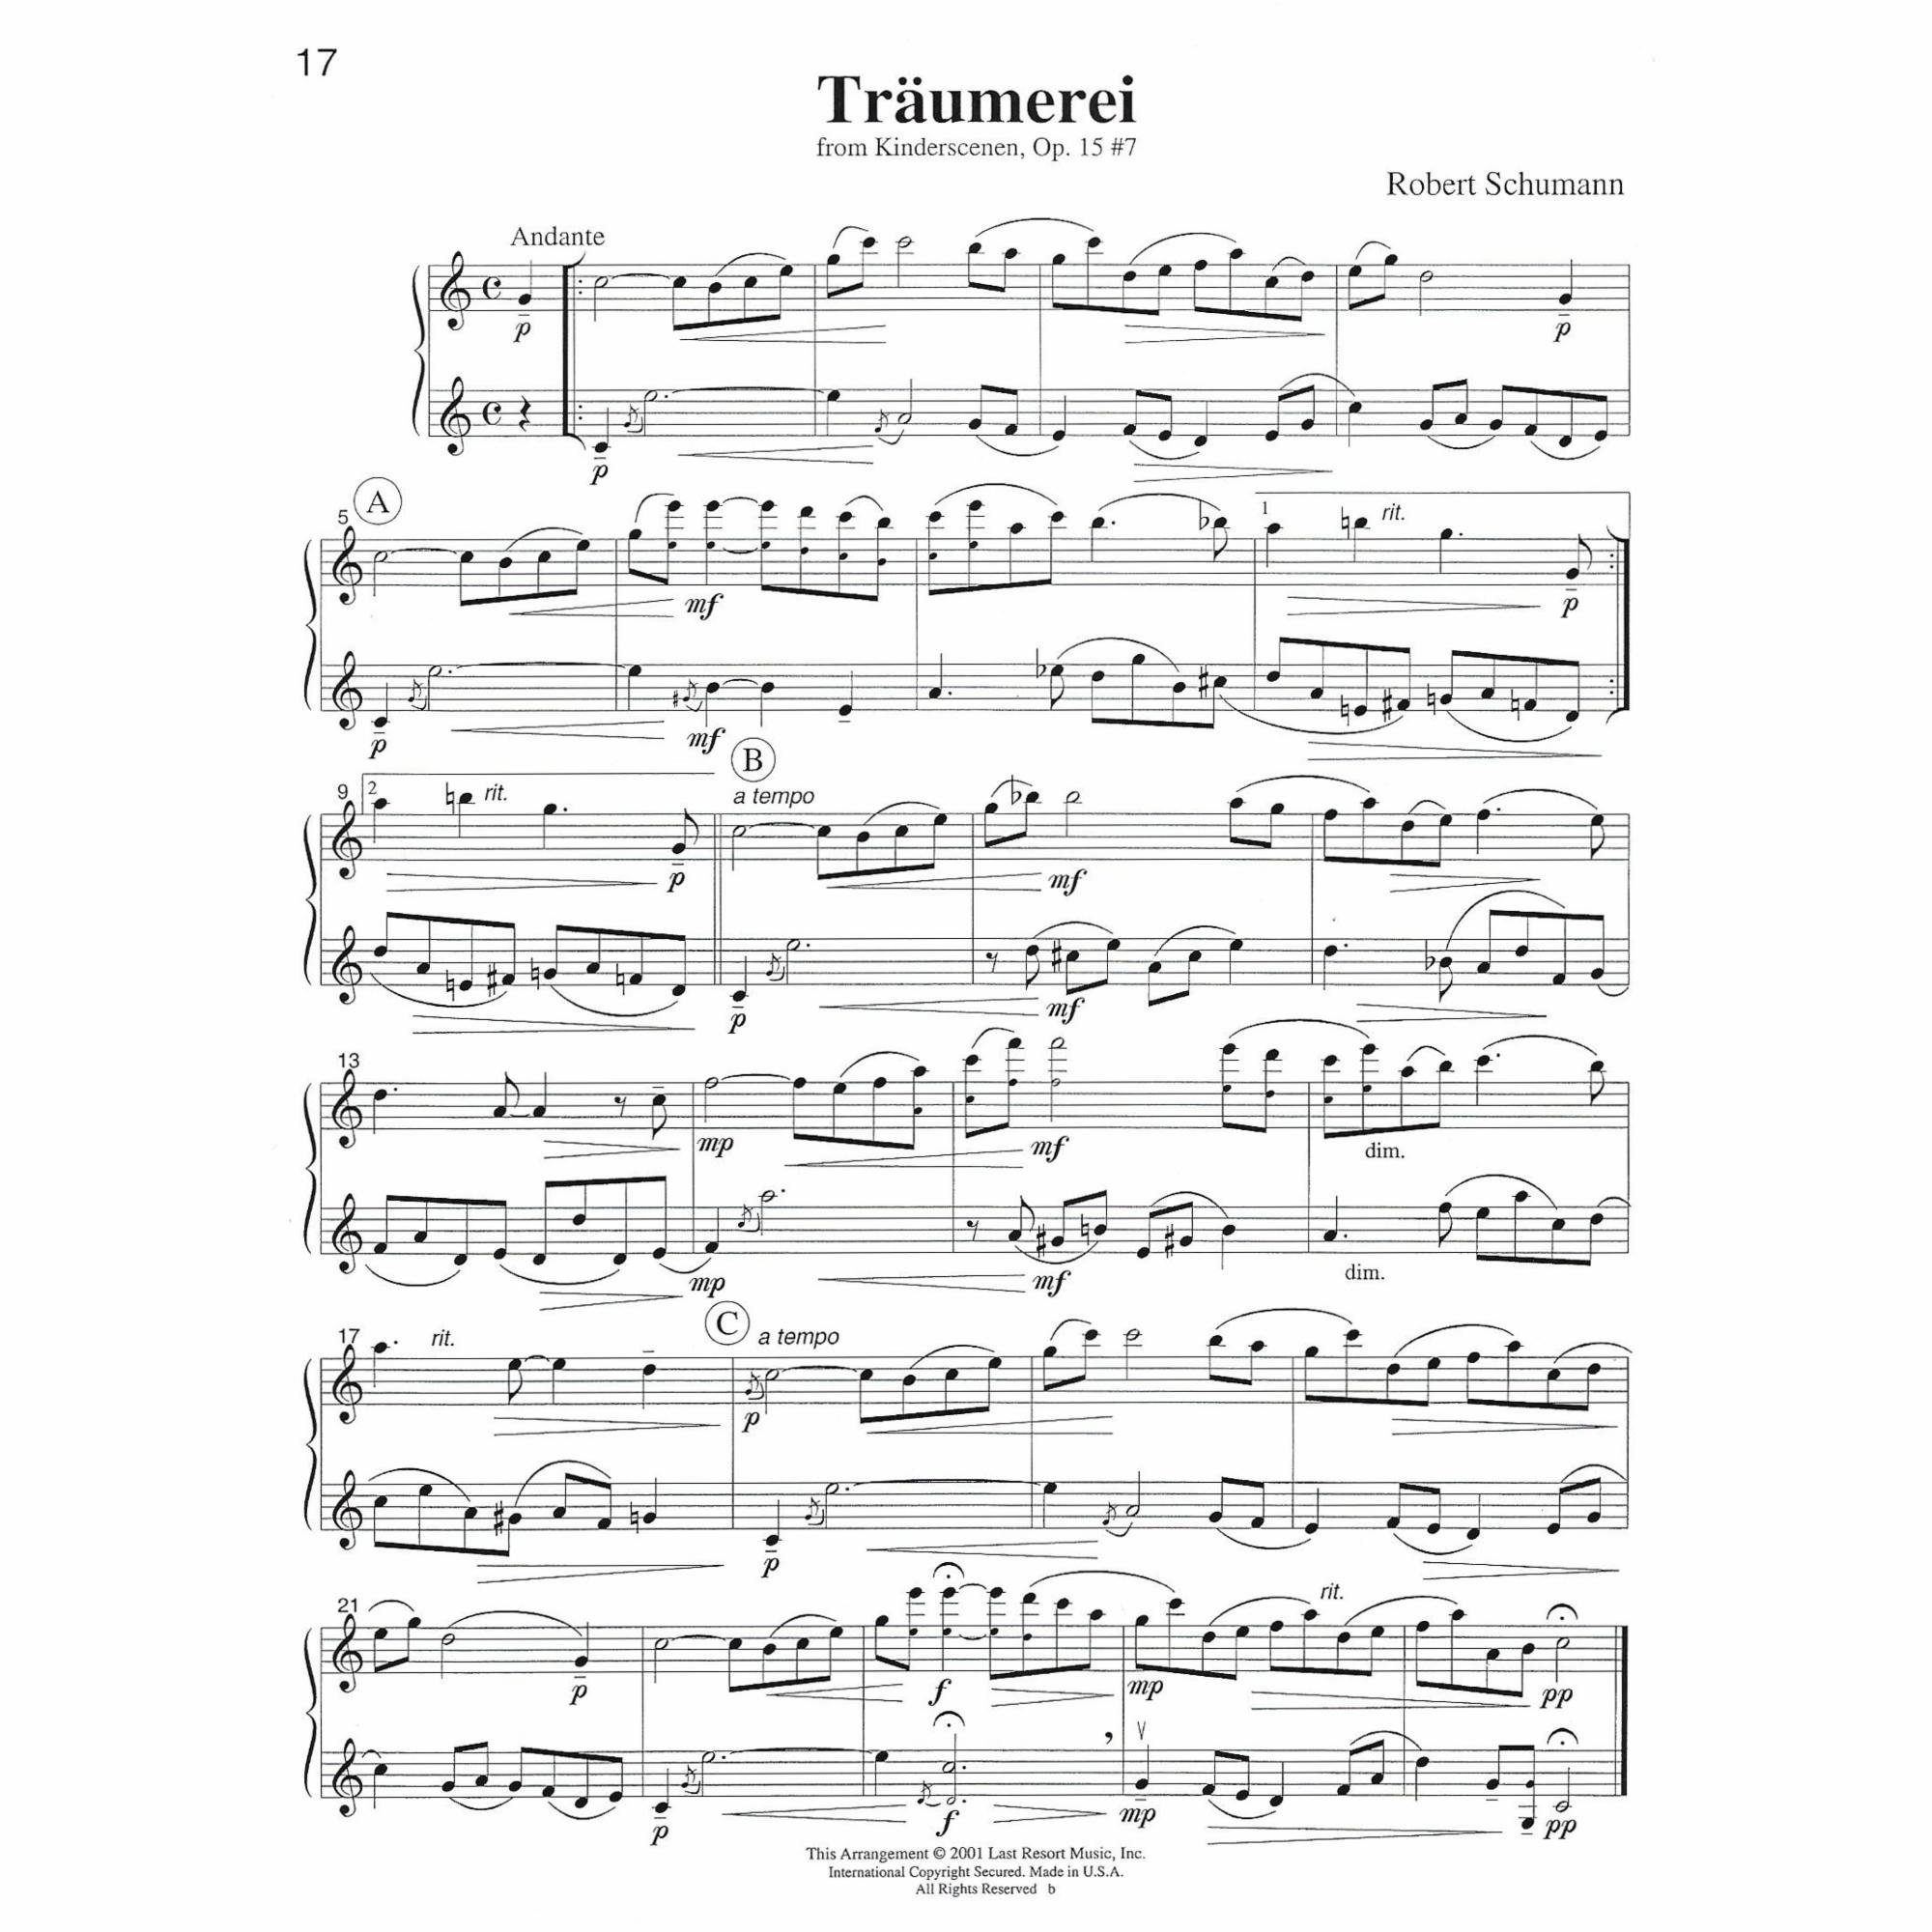 Sample: Two Violins (Pg. 17)